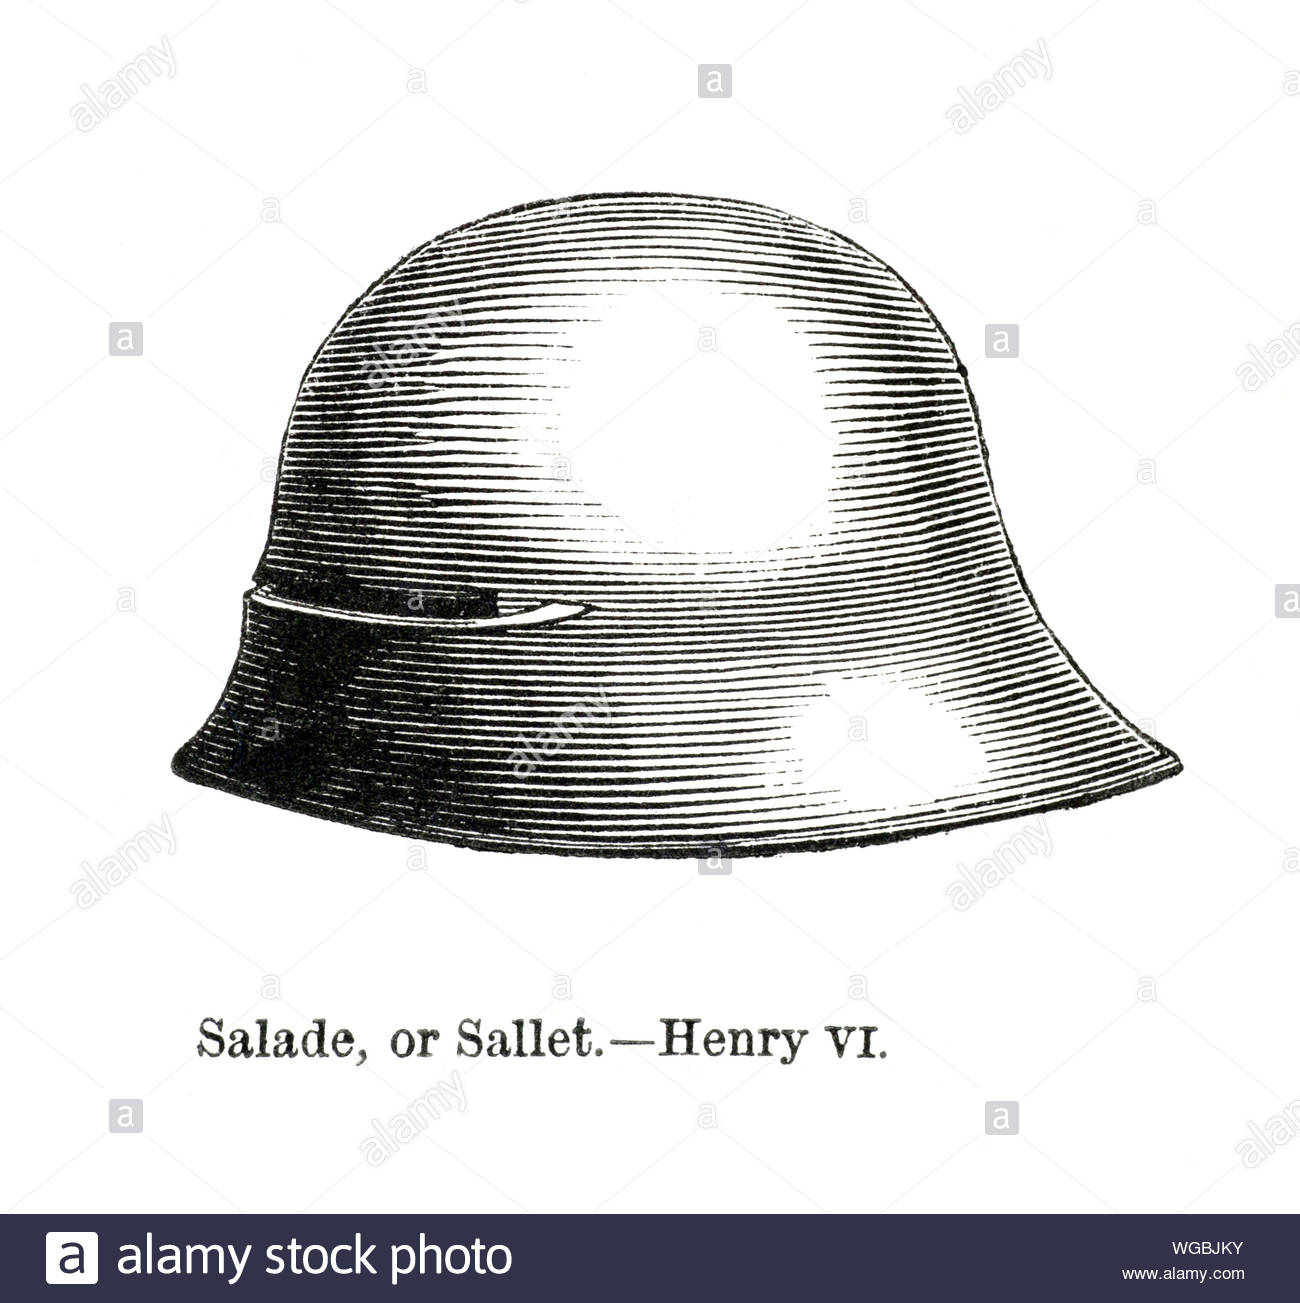 Salade or Sallet, Henry VI, vintage illustration from 1884 Stock Photo